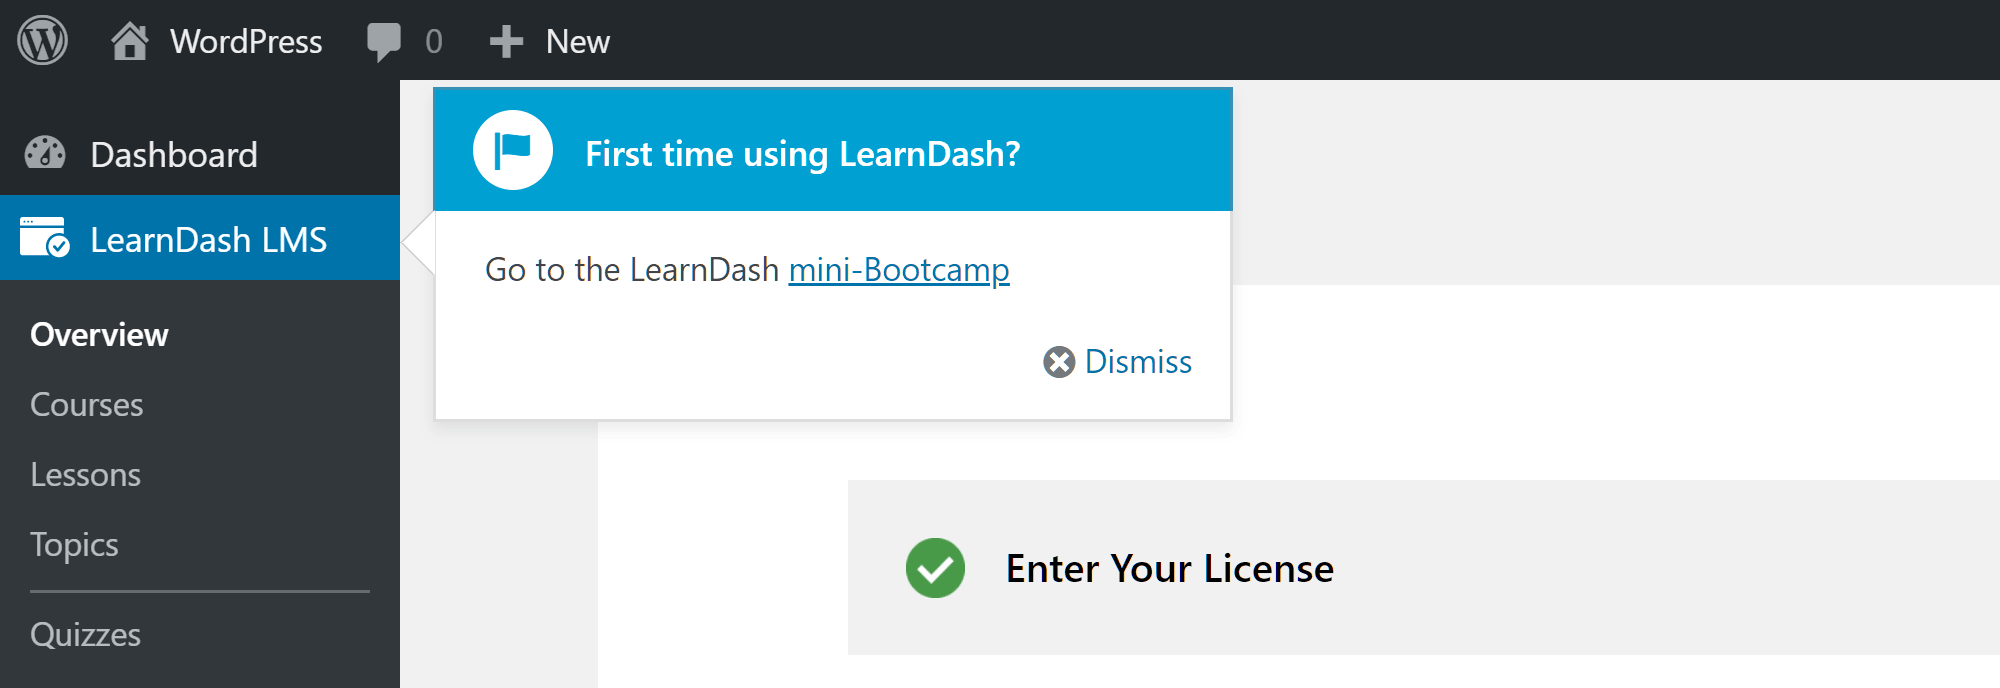 LearnDash Bootcamp